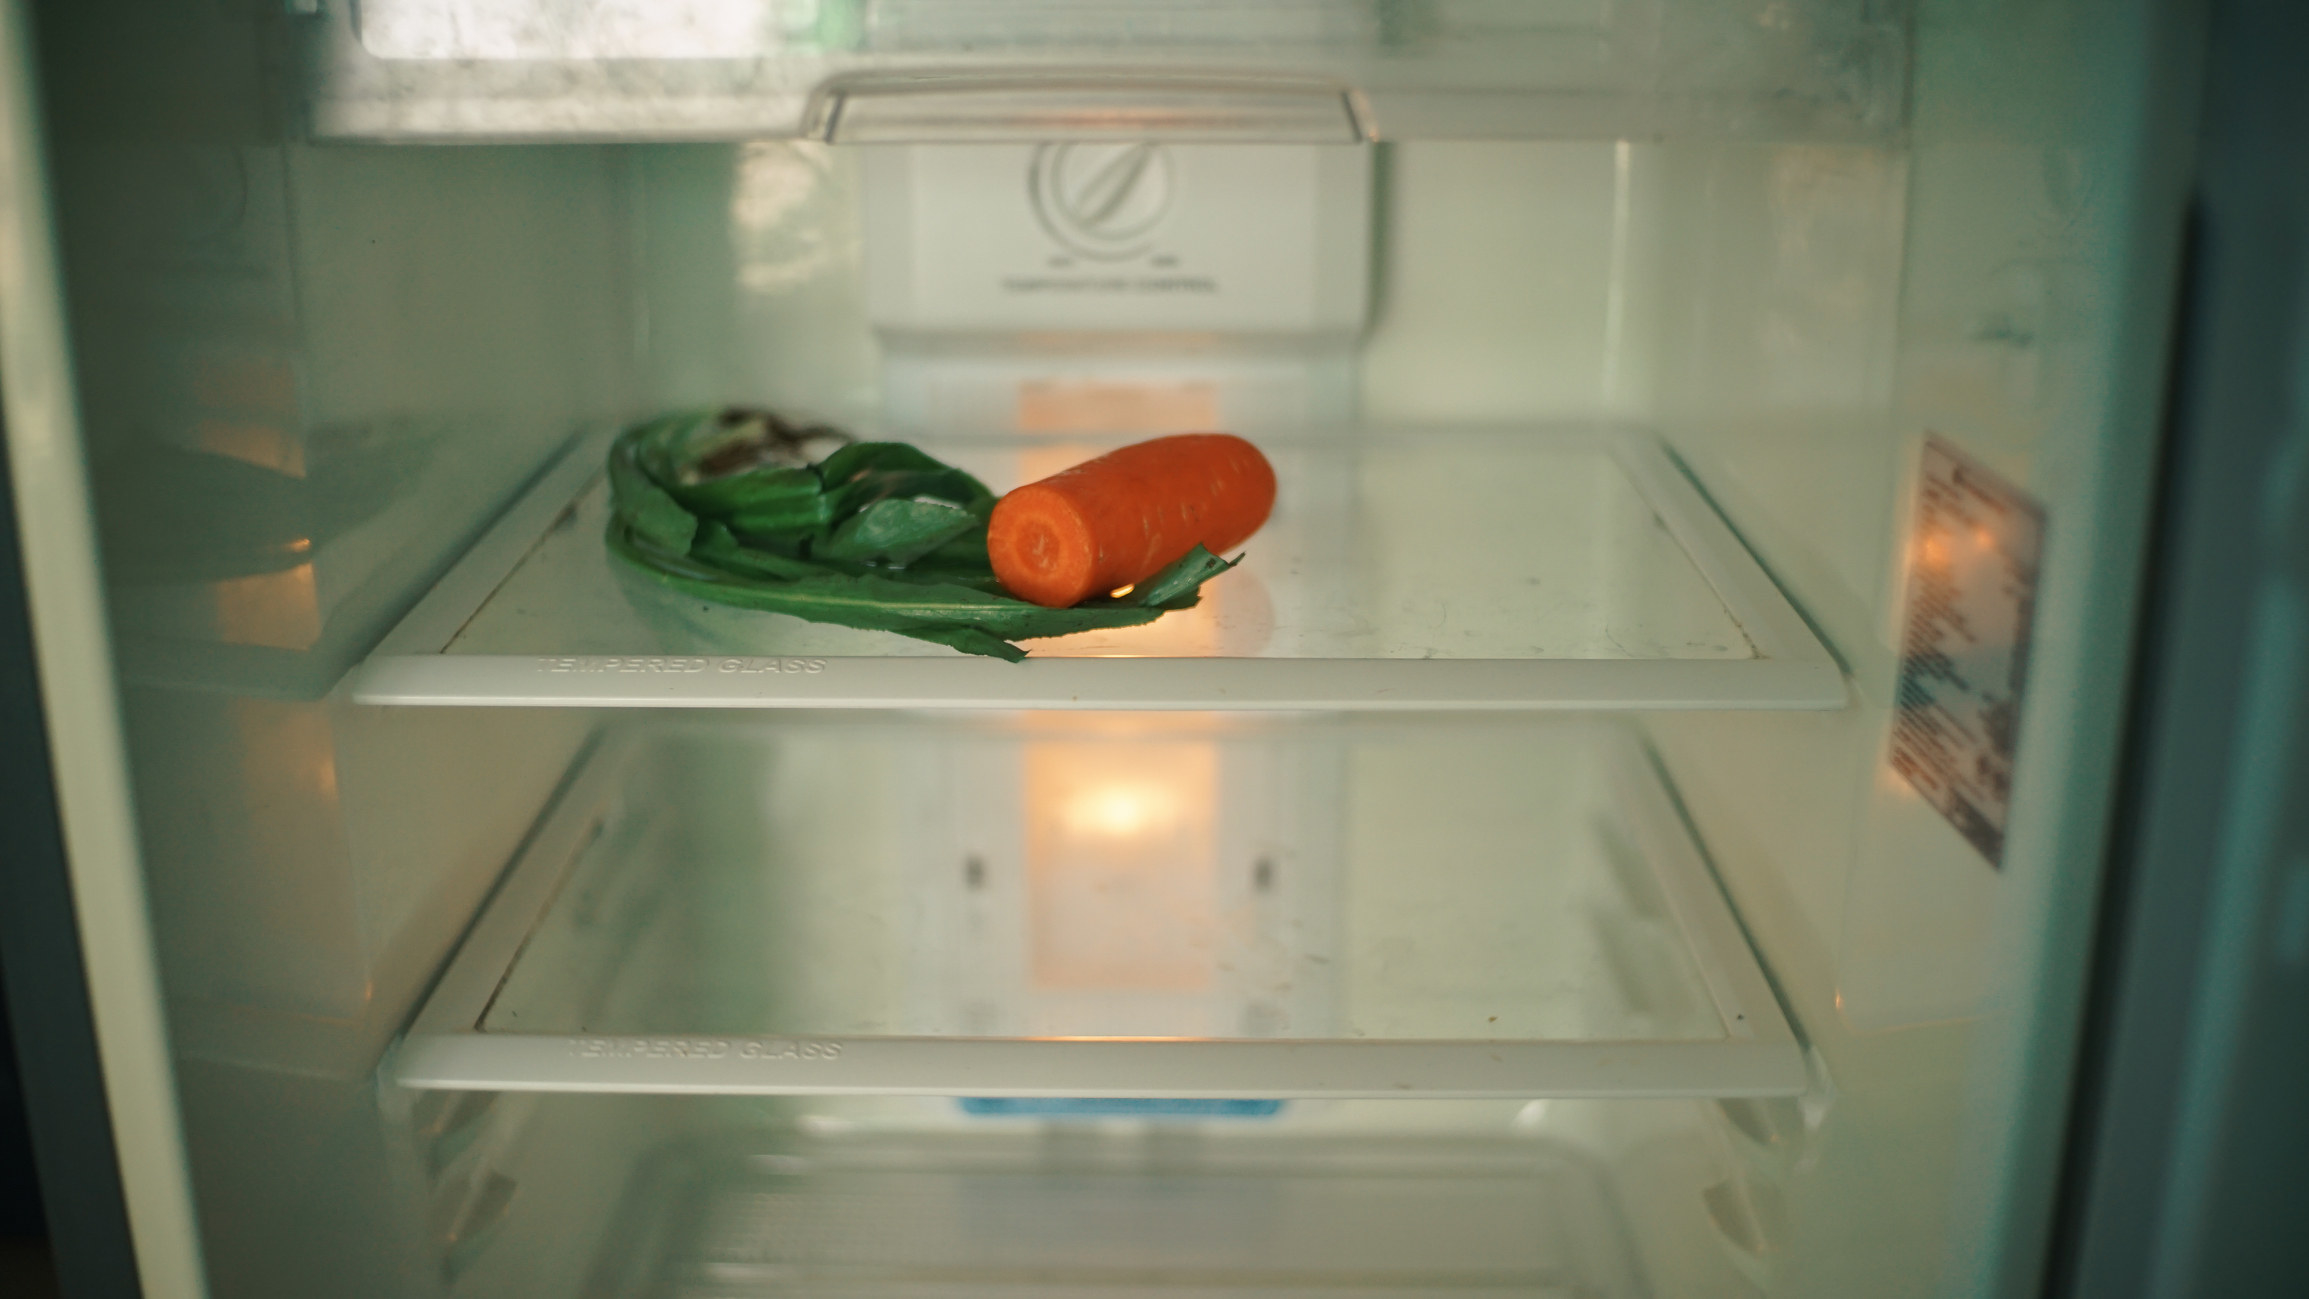 A nearly empty fridge